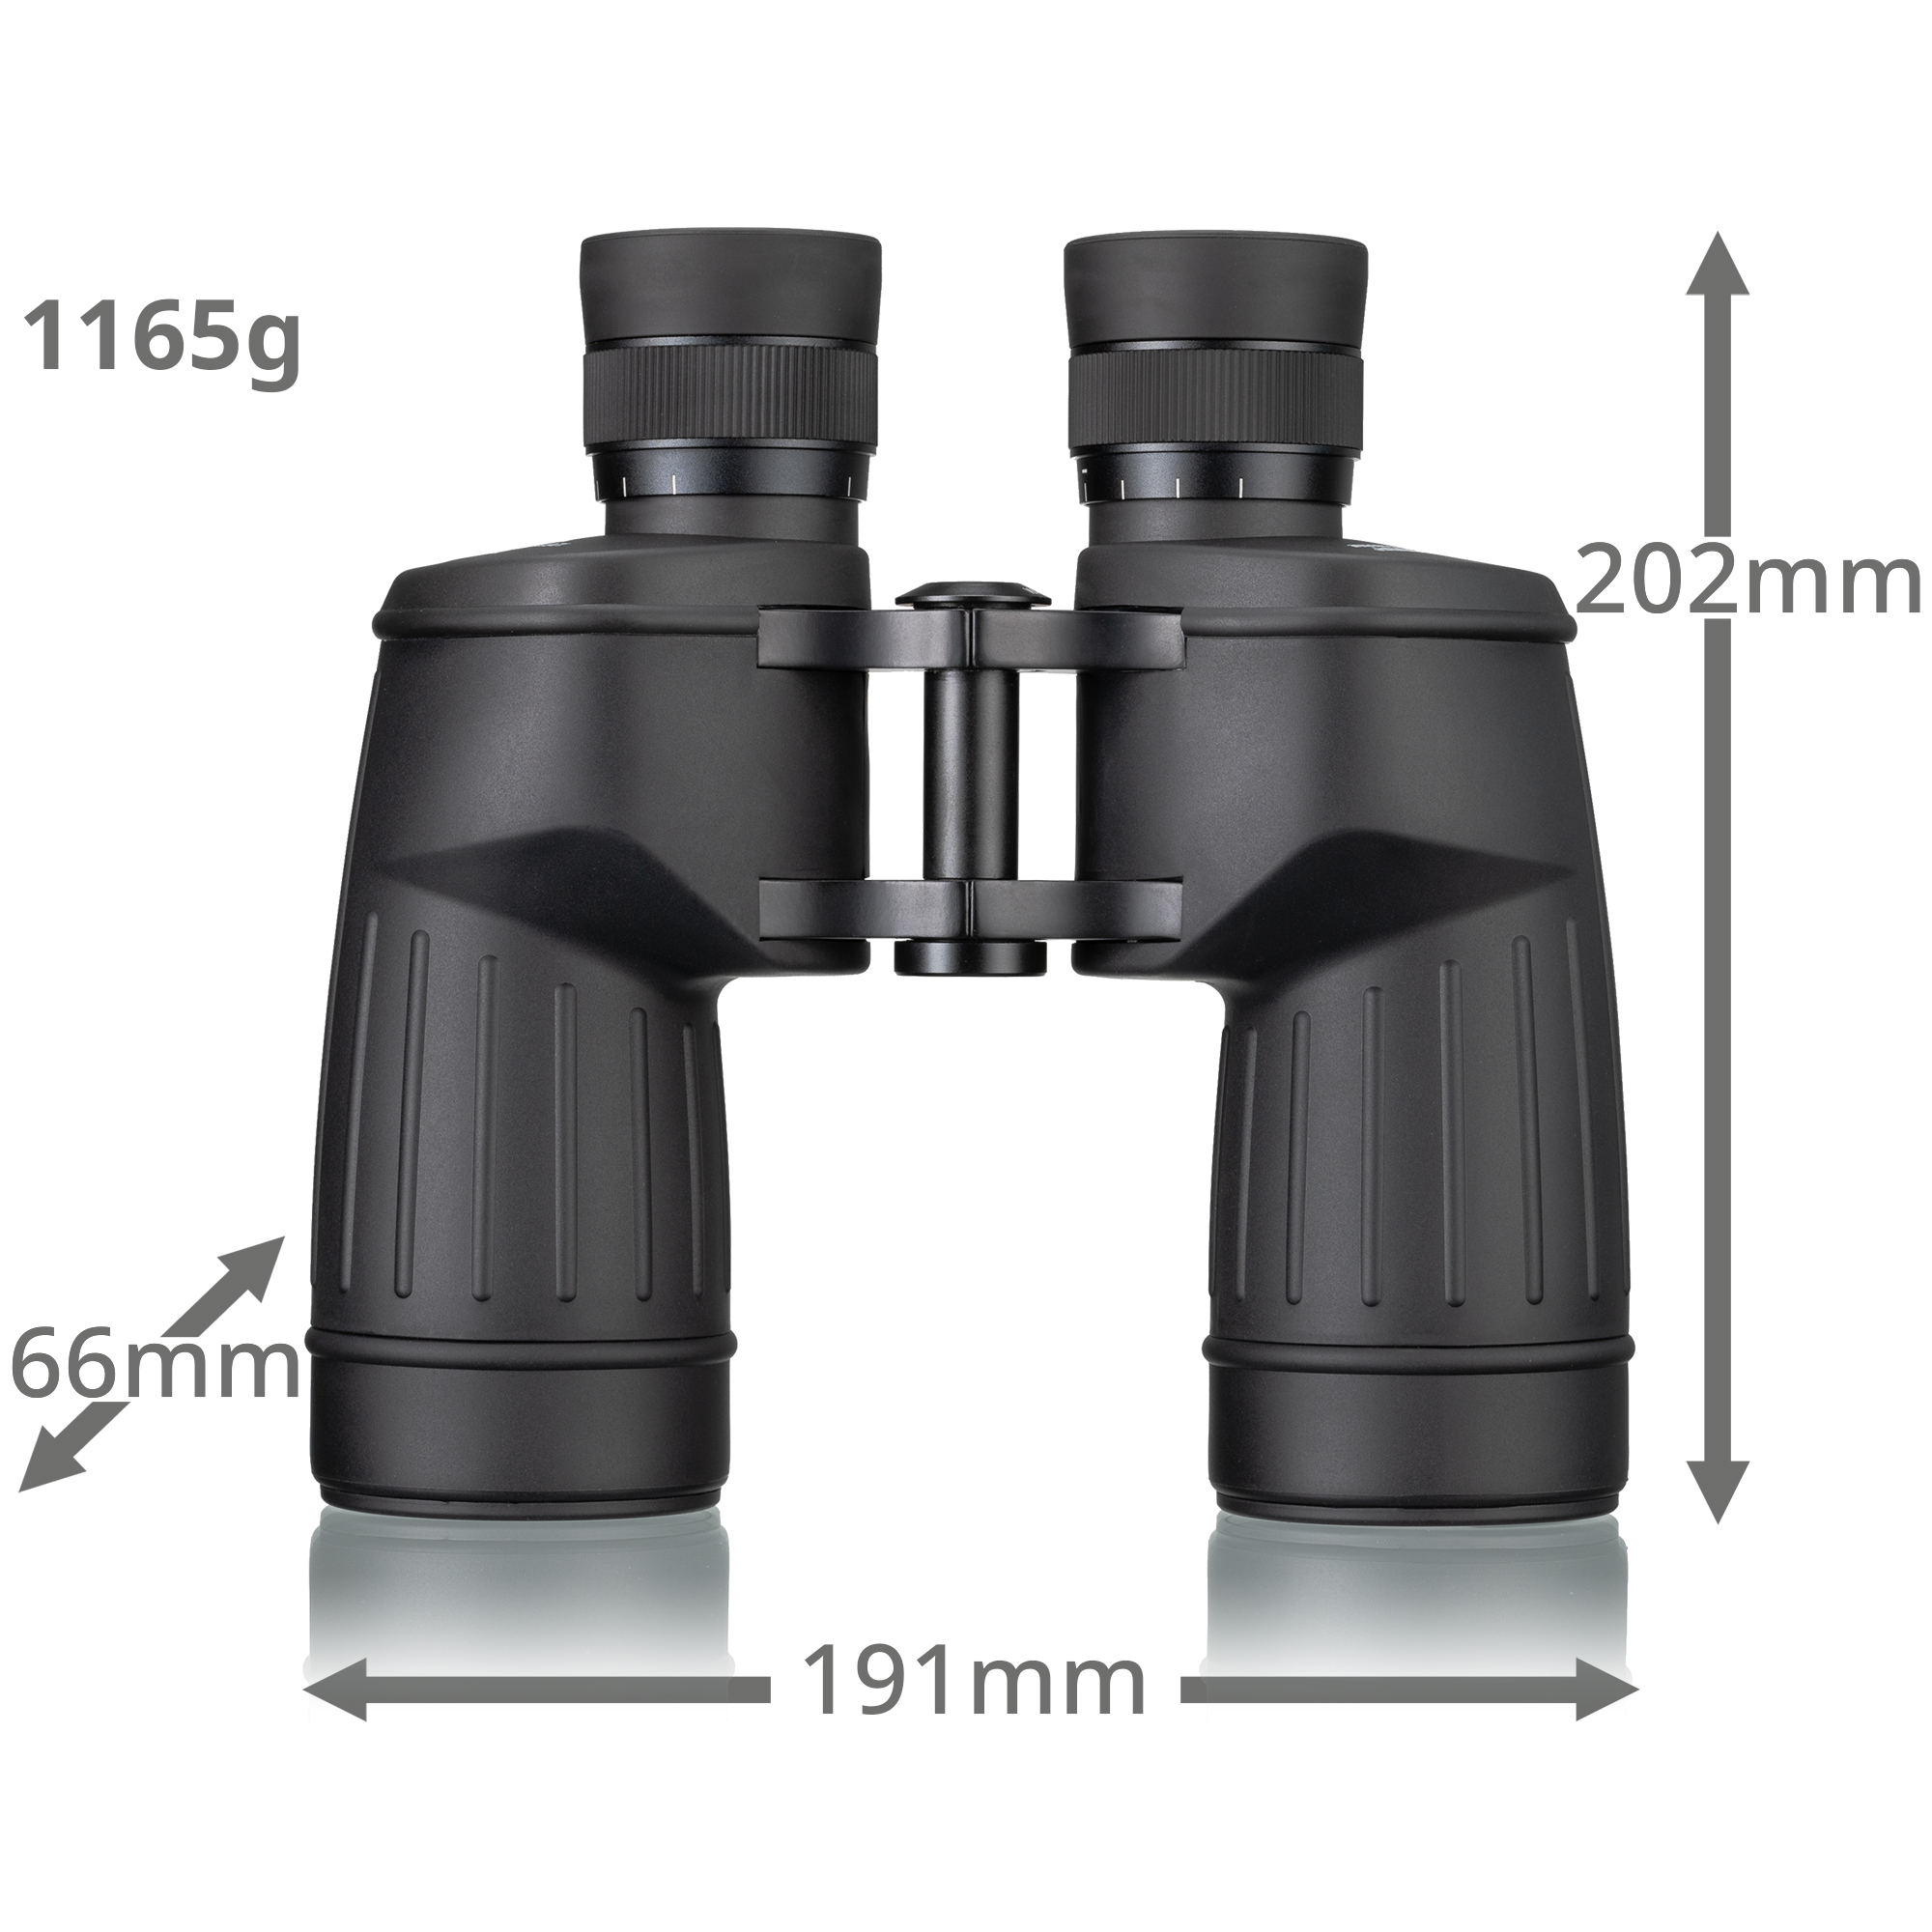 BRESSER Astro & Marine SF 10x50 WP binoculars